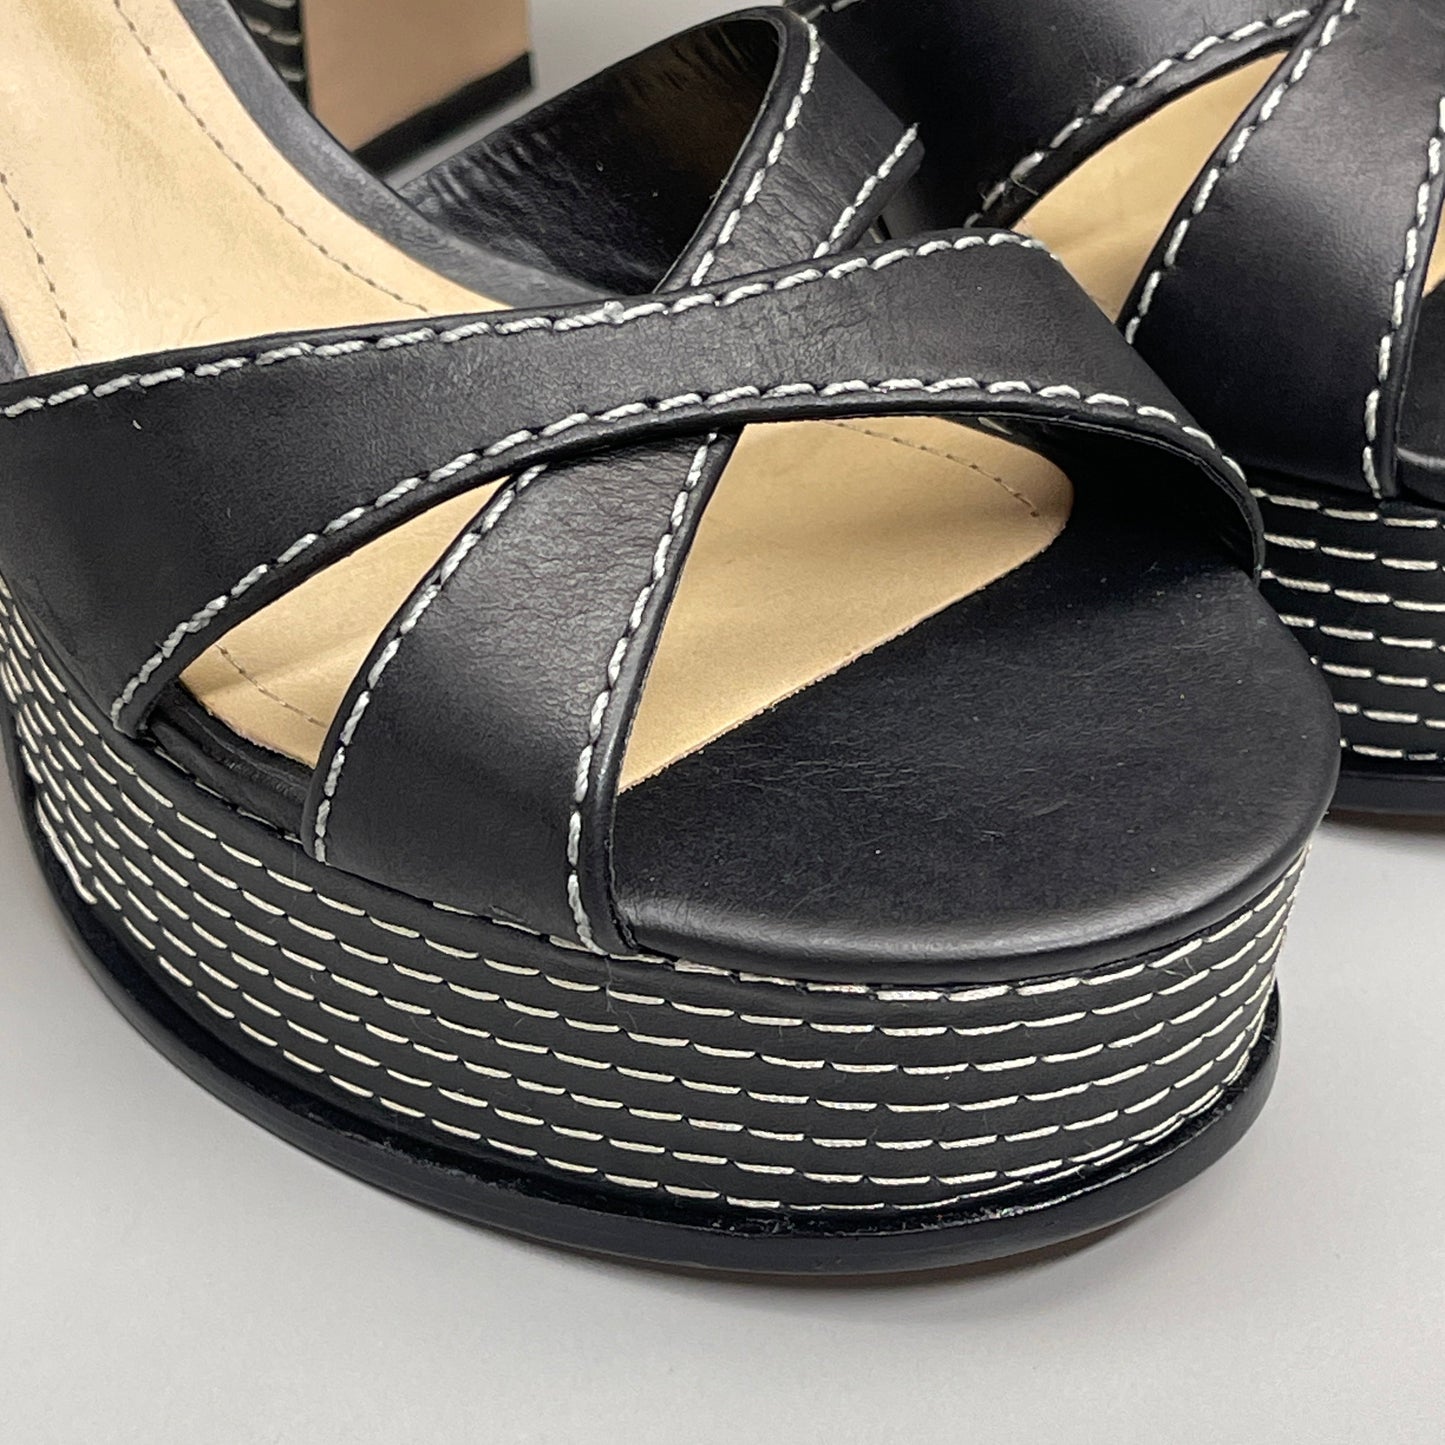 SCHUTZ Keefa Casual Women's Leather Sandal Black Platform 4" Heel Shoes Sz 5.5B (New)